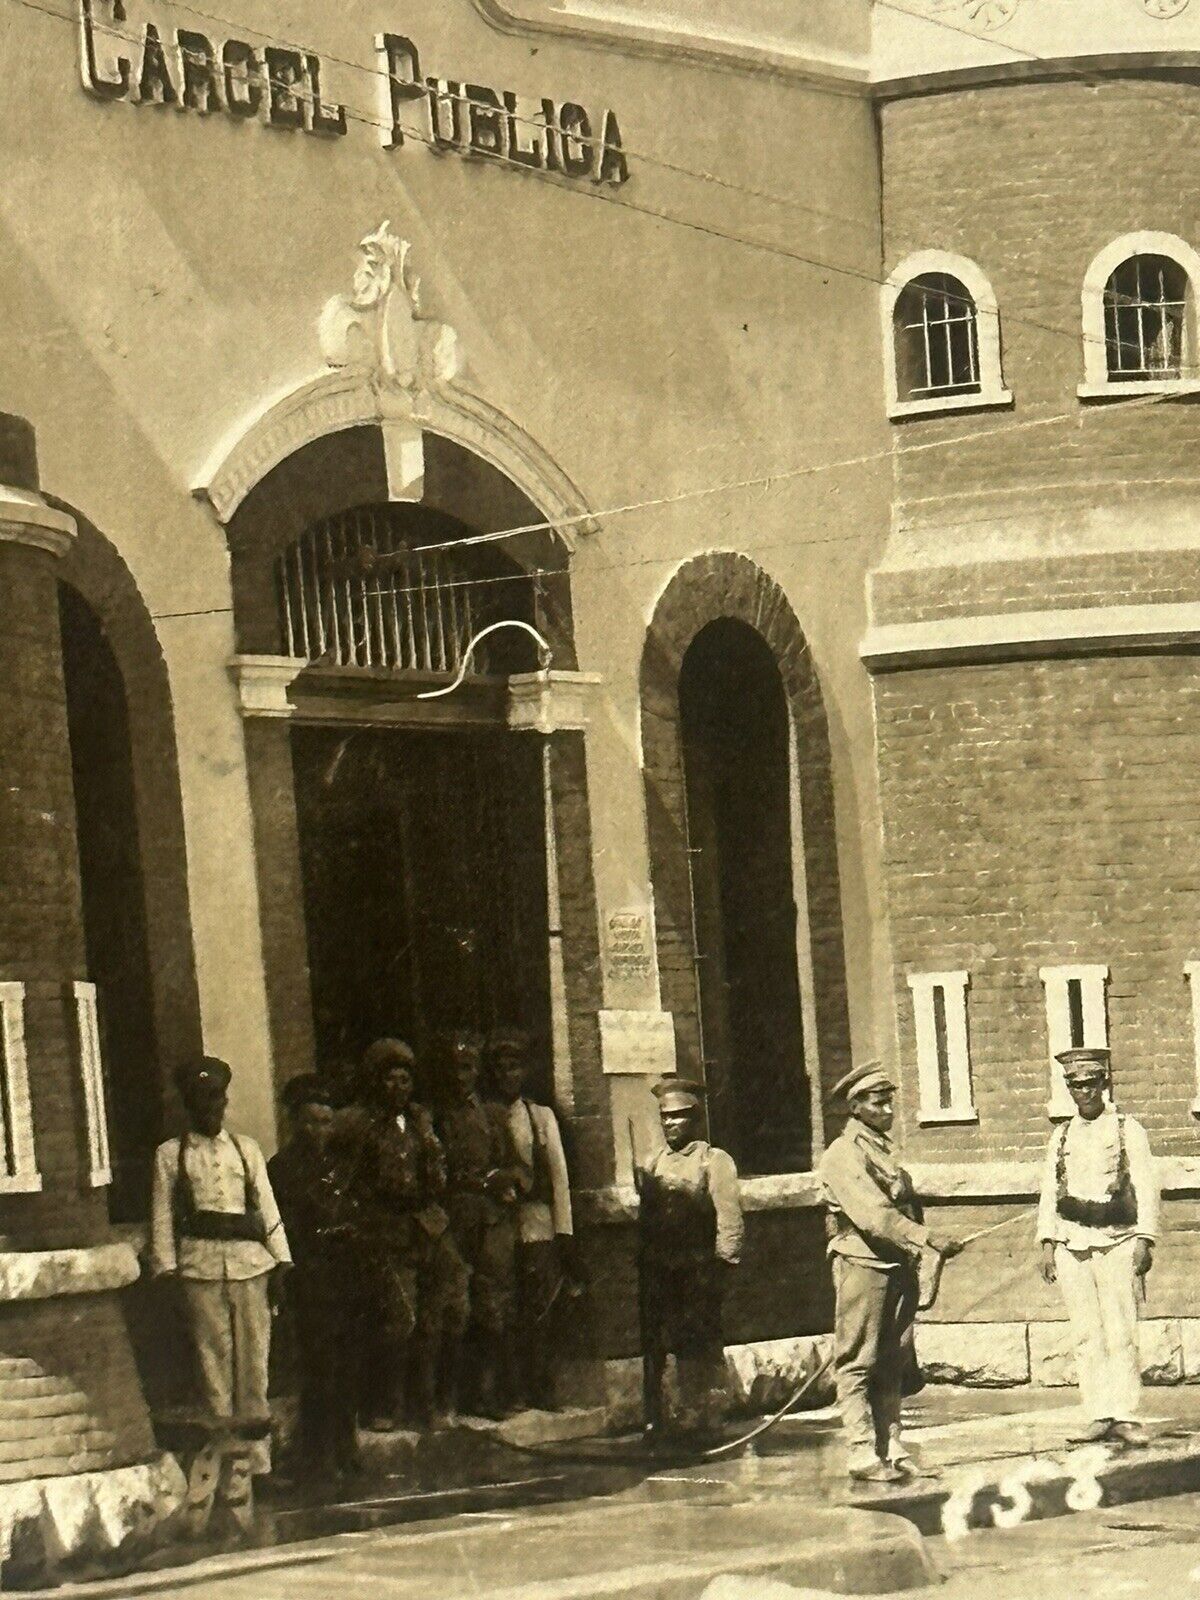 Juarez Mexico Postcard City Jail RPPC Photo Prison Guards Man Using Hose 1930s